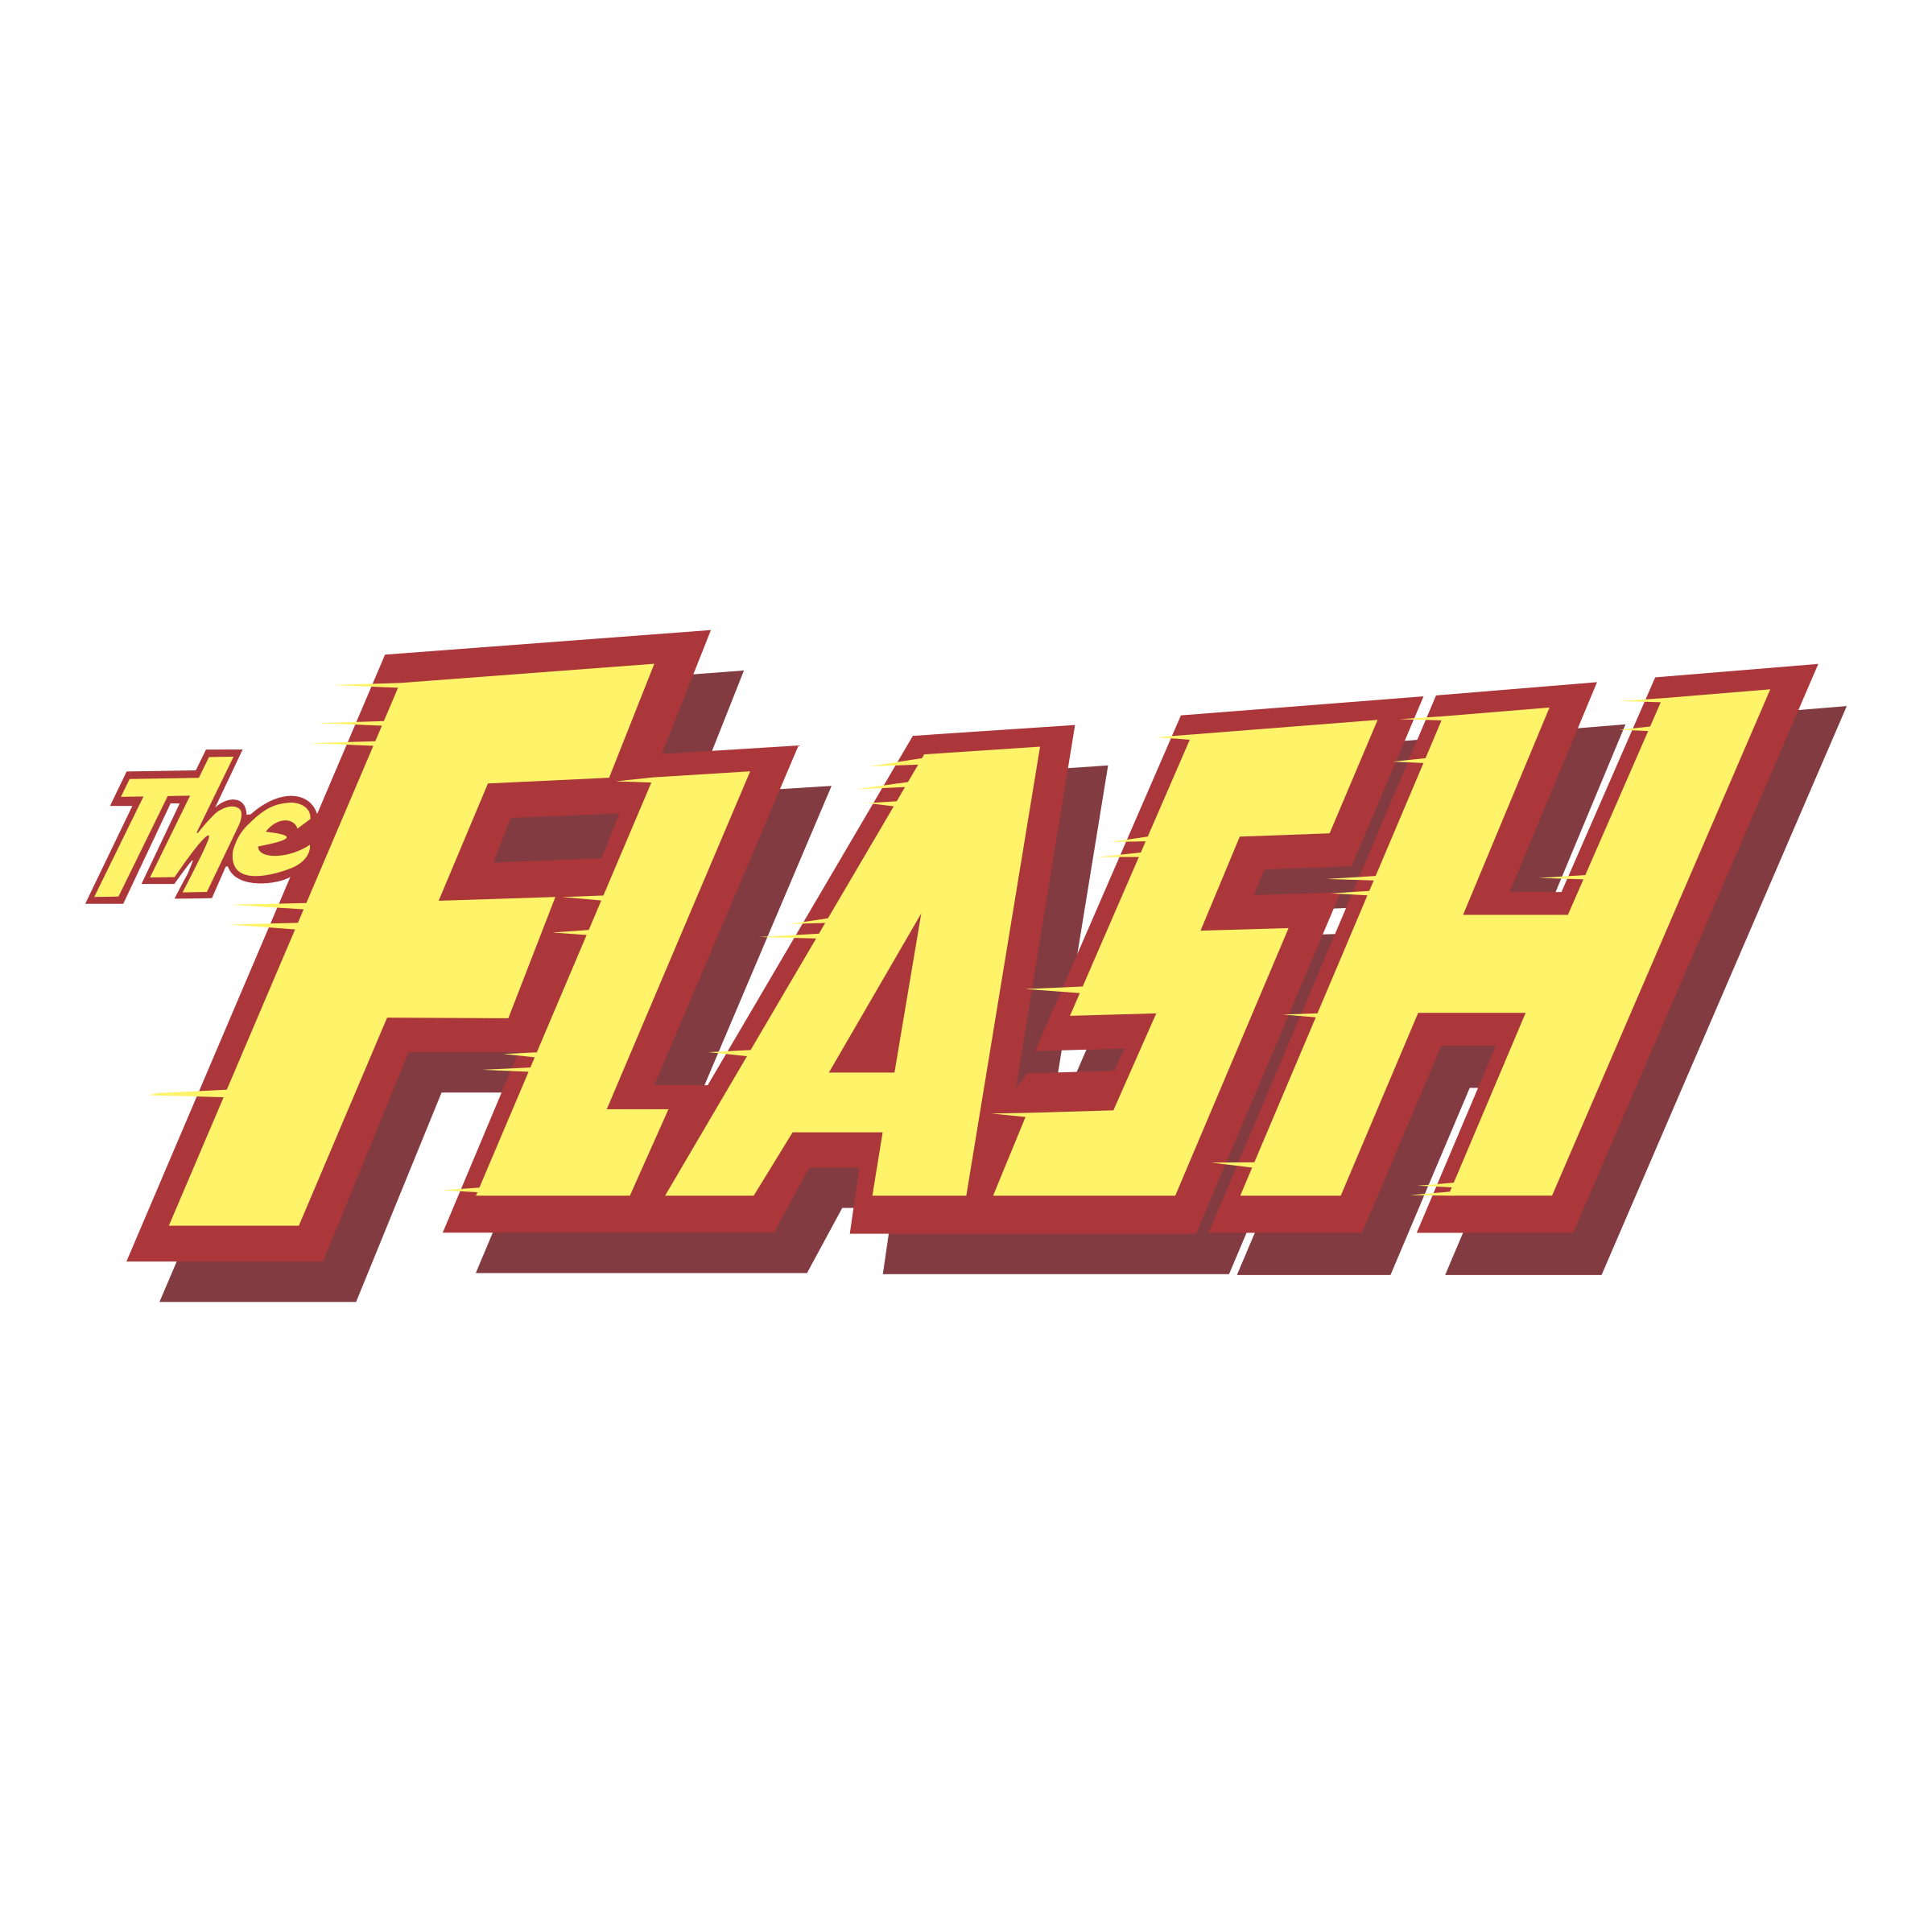 Vector Flash Logo PNG descargar imagen | PNG Arts